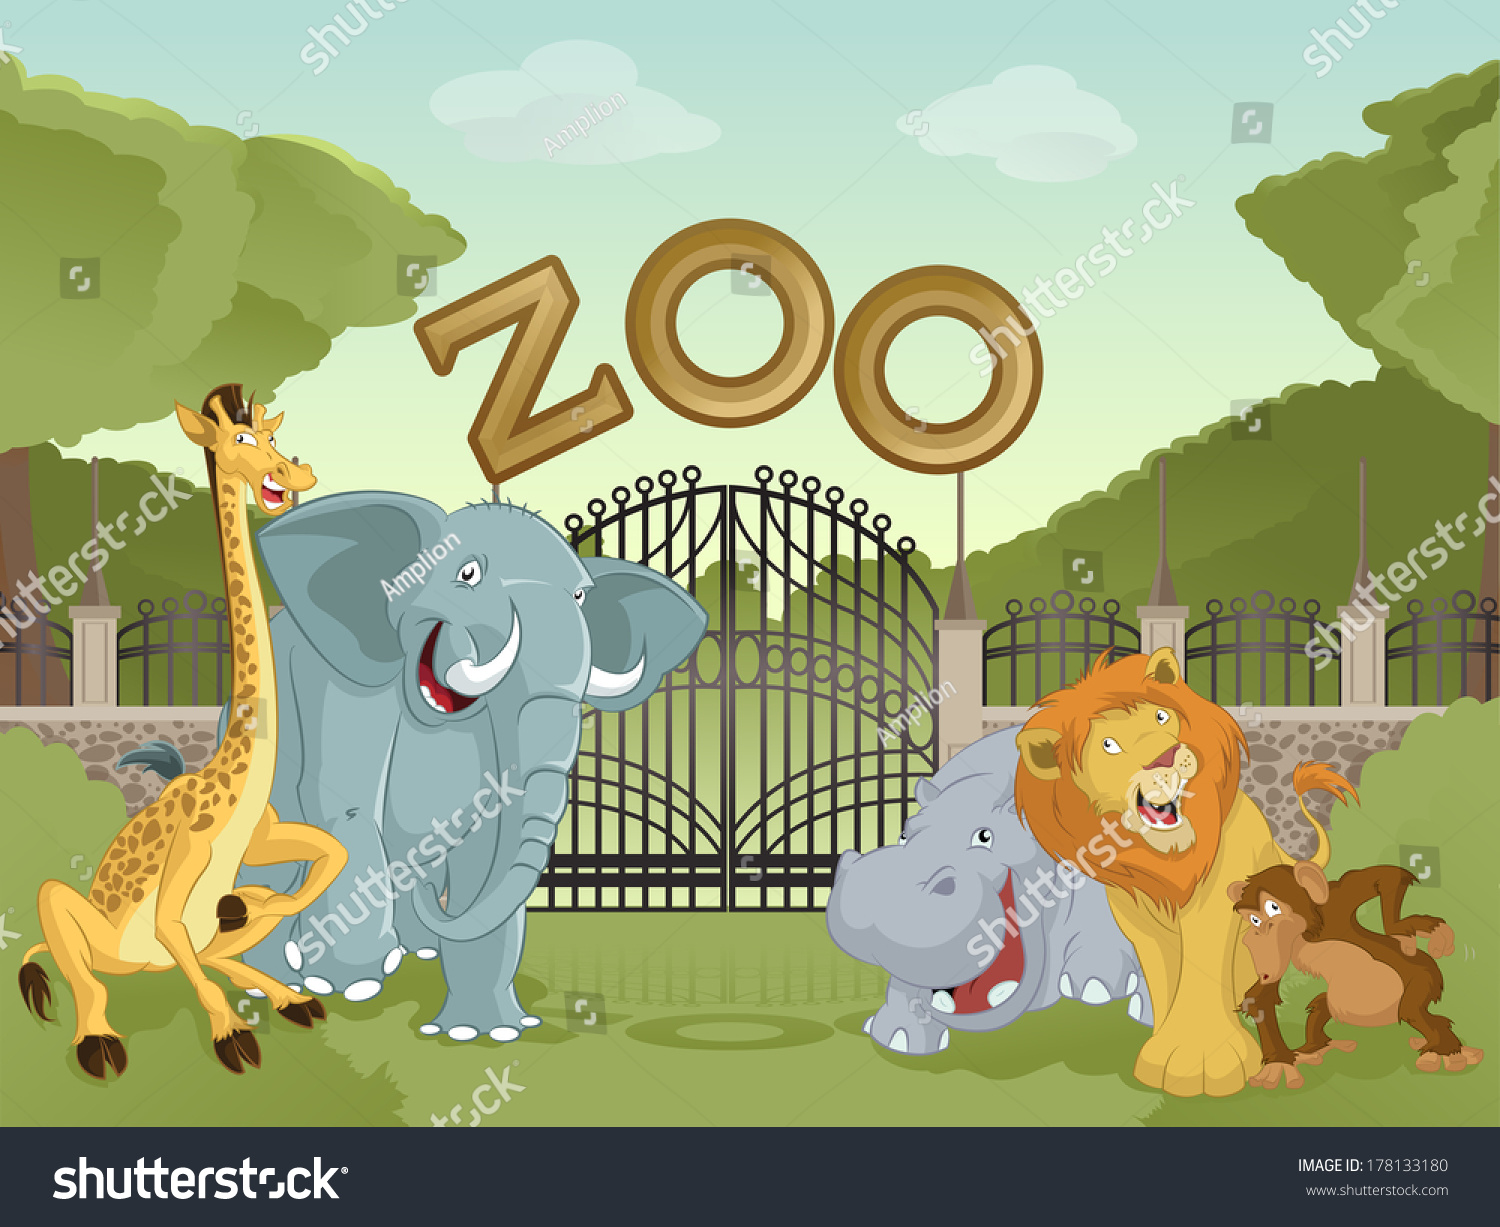 zoo gate clipart - photo #50